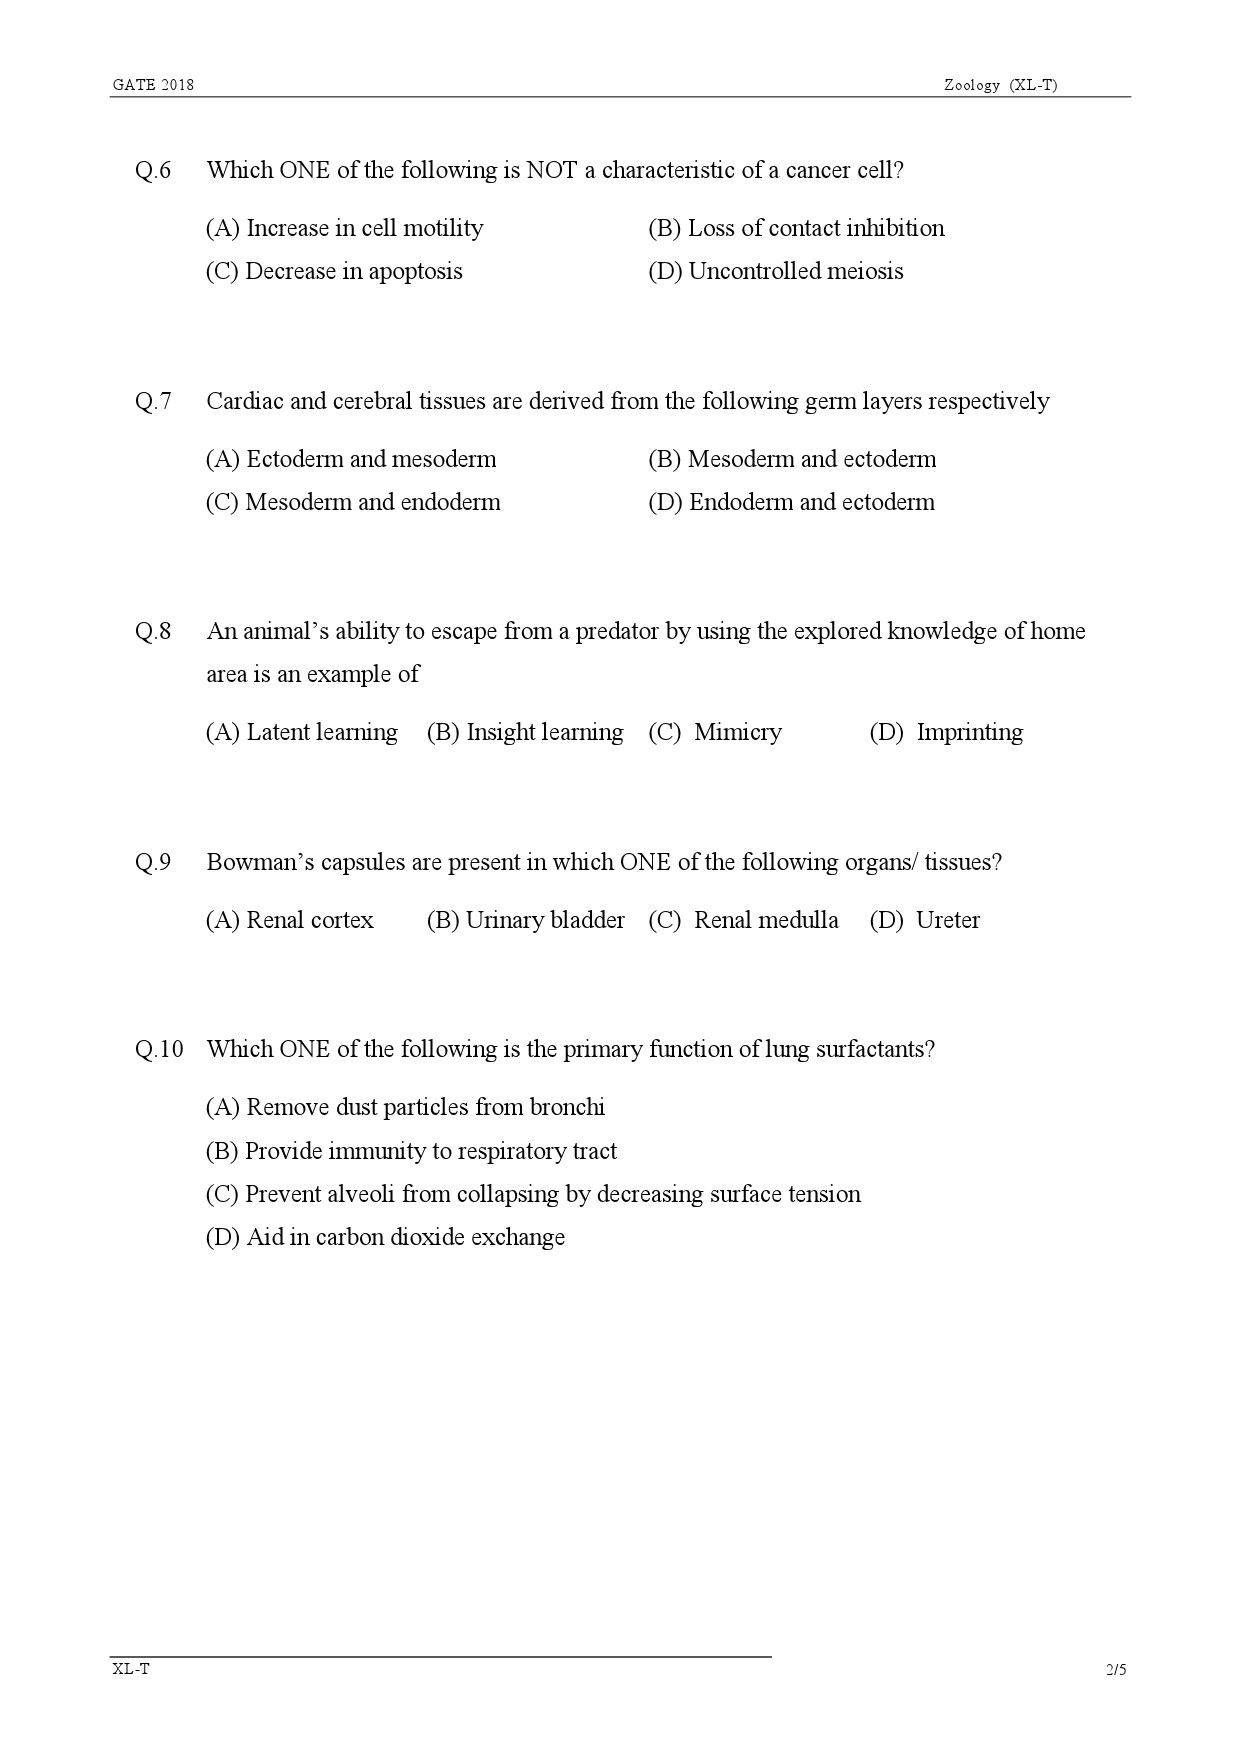 GATE Exam Question Paper 2018 Life Sciences 9